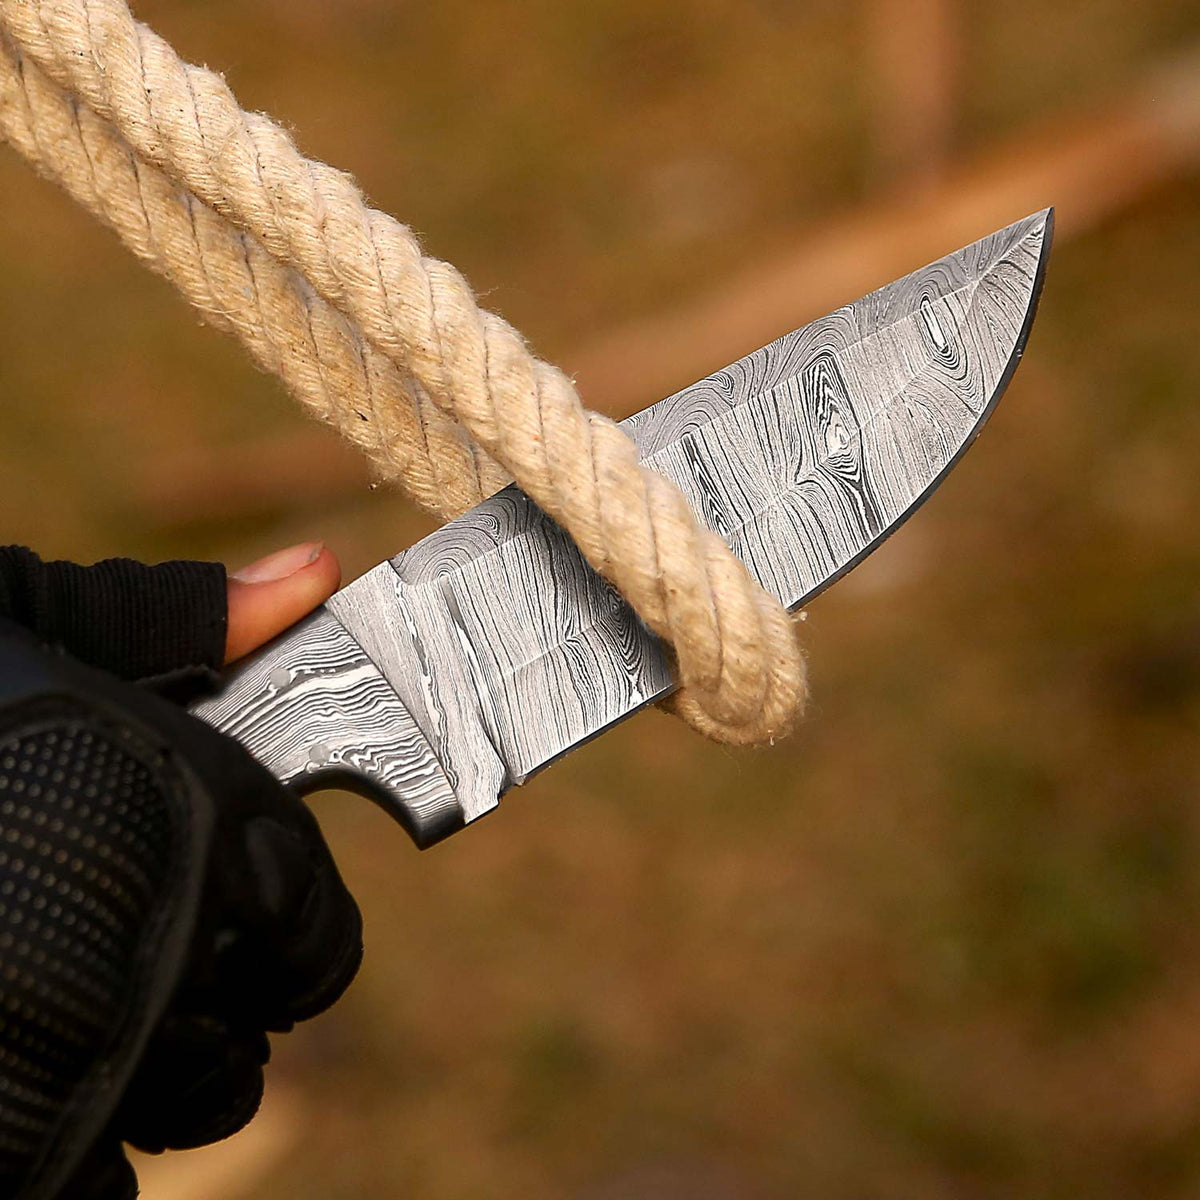 Sharp Fixed Blade Hunting Knives For Camping Bushcraft